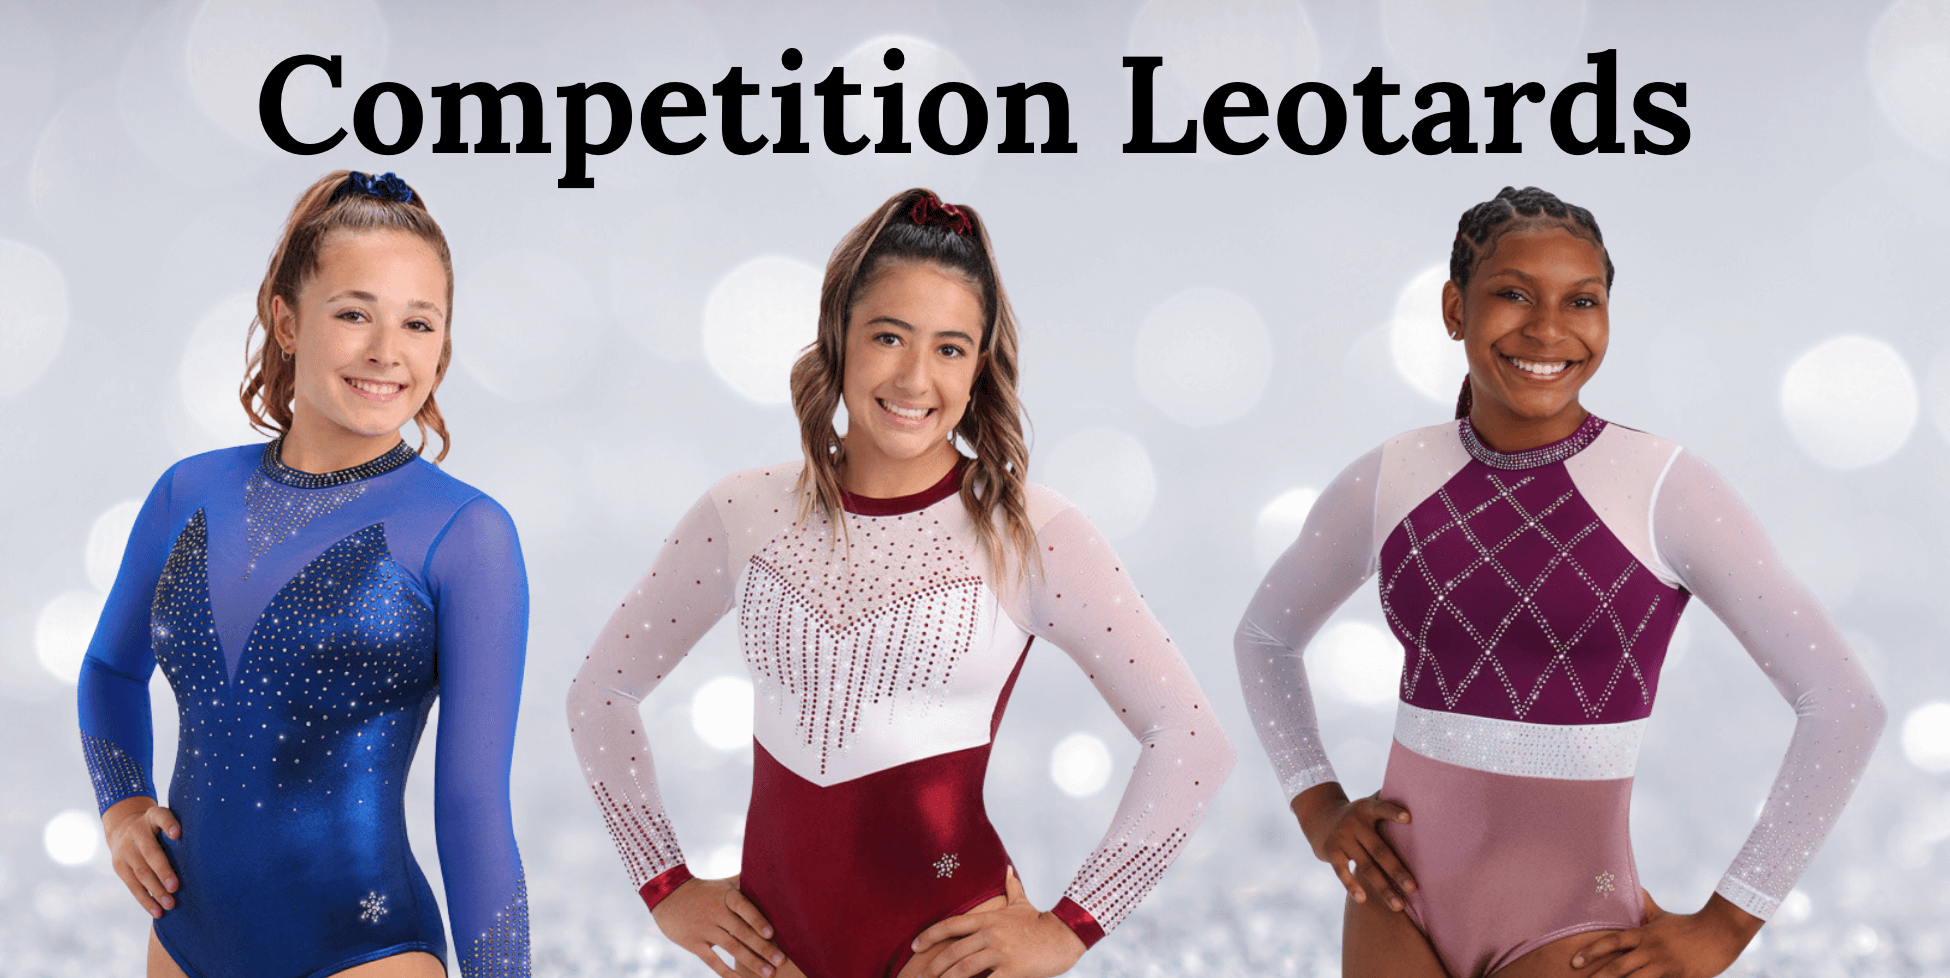 Gymnastics Competition Leotards by Snowflake Designs Leotards